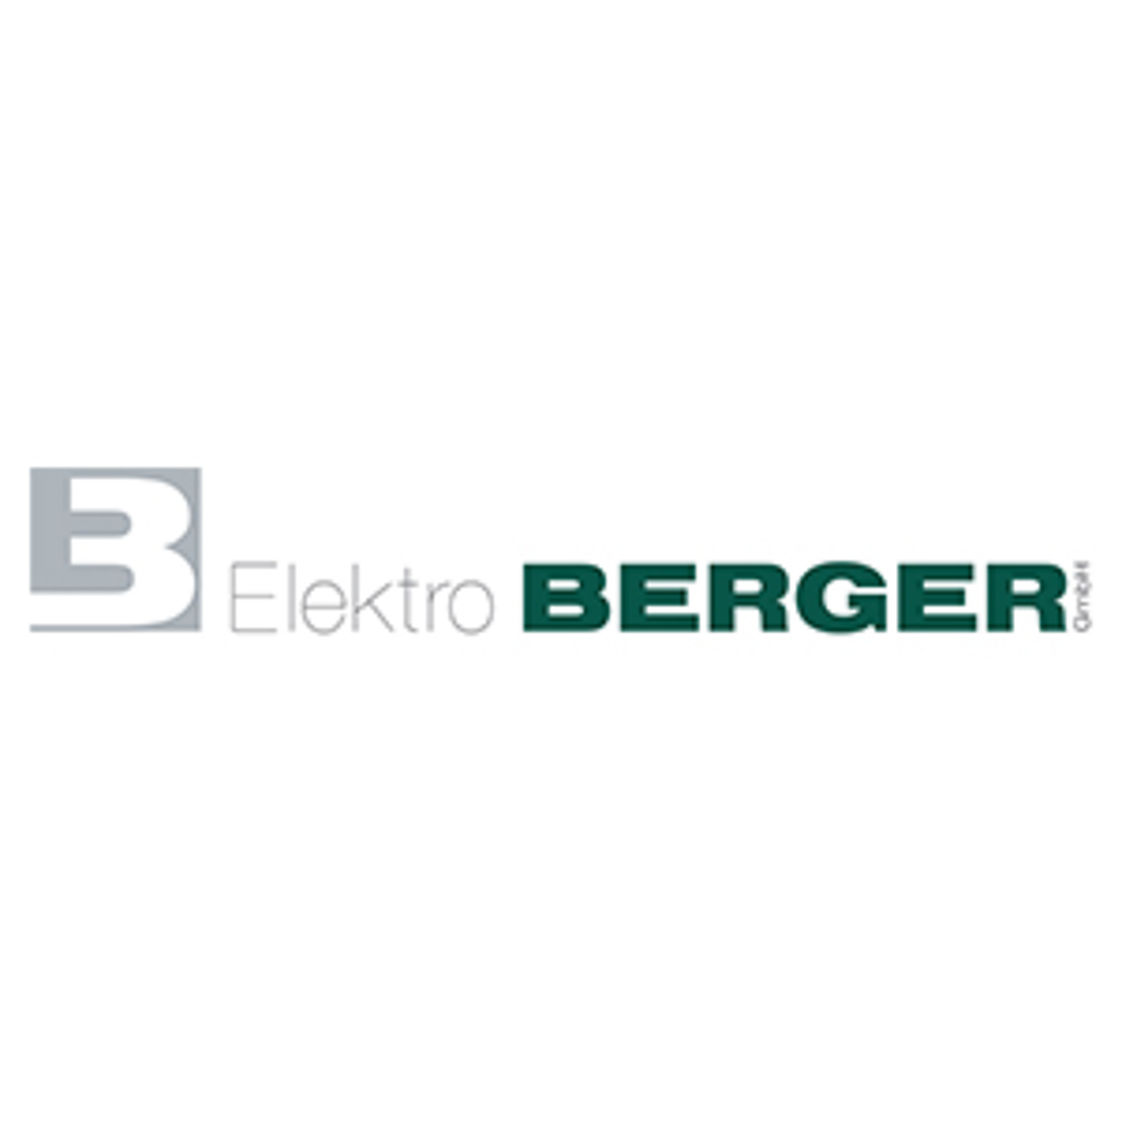 Elektro Berger